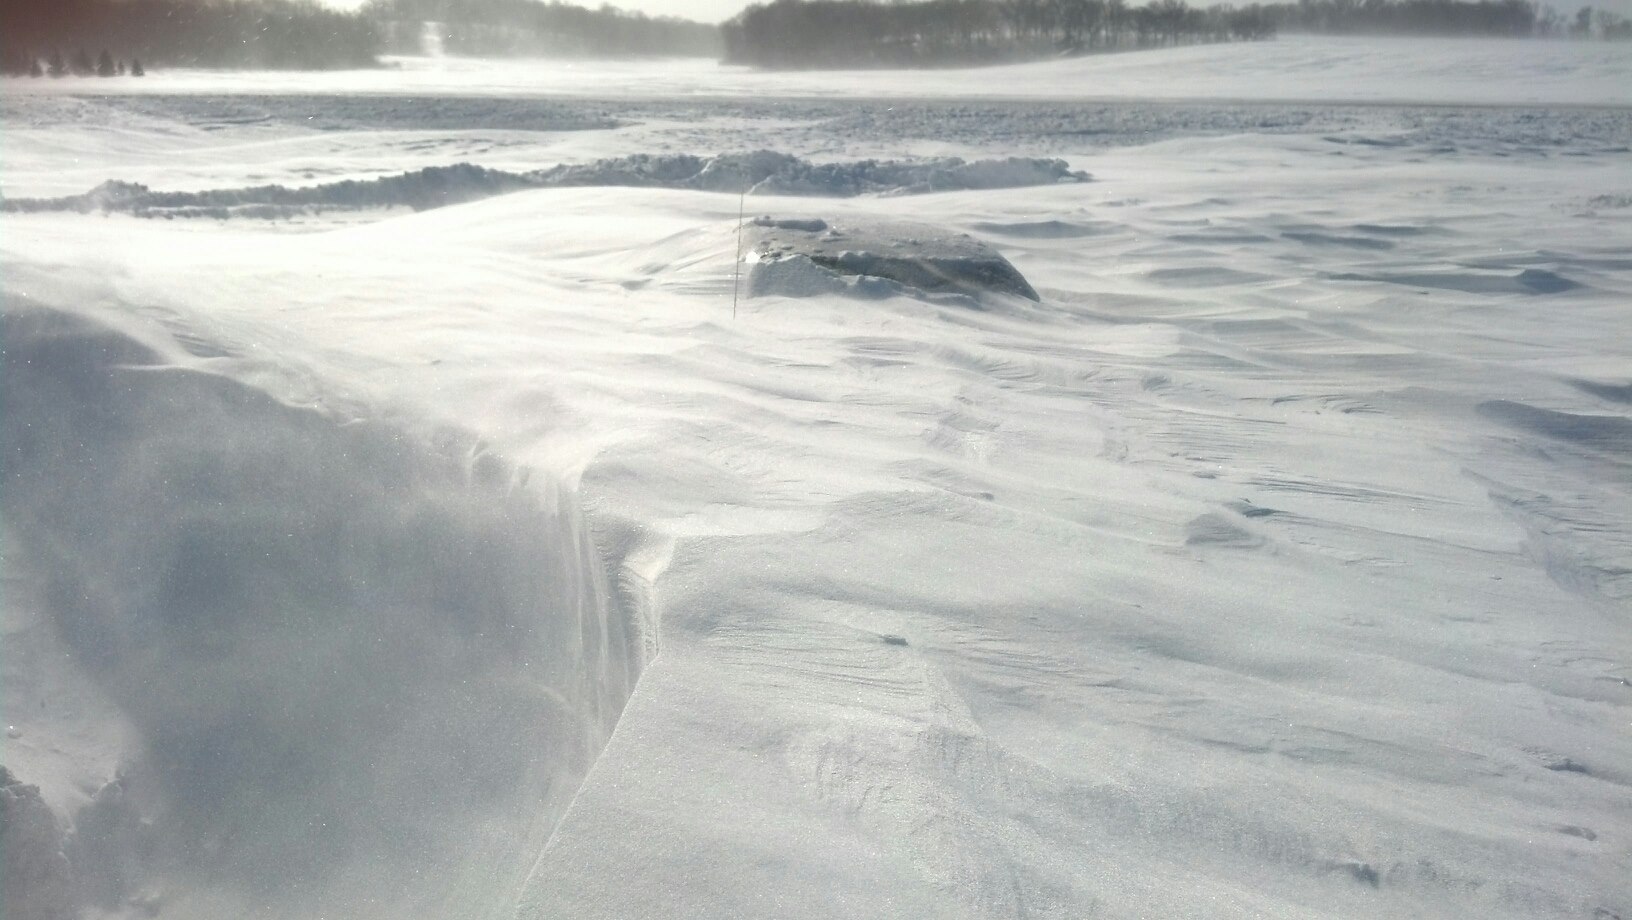 car in Le Sueur Minnesota after recent blizzard